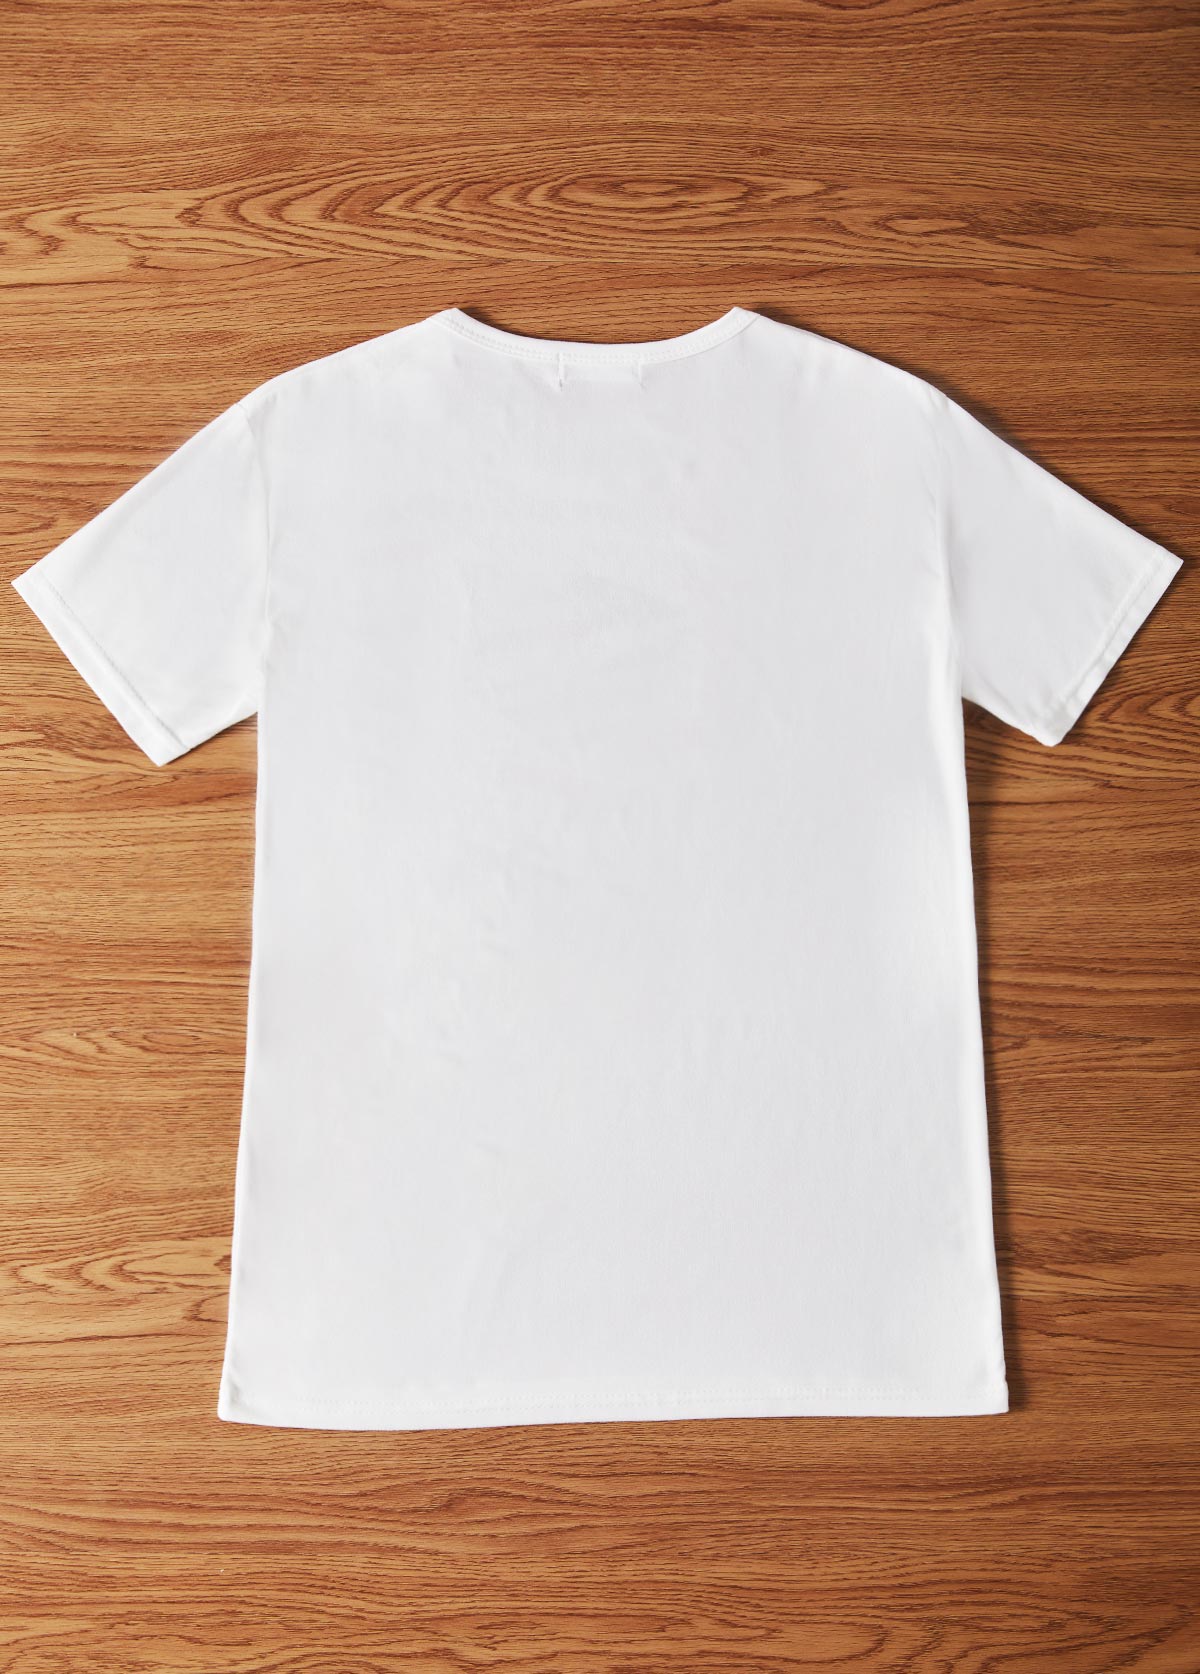 White American Flag Print Round Neck T Shirt